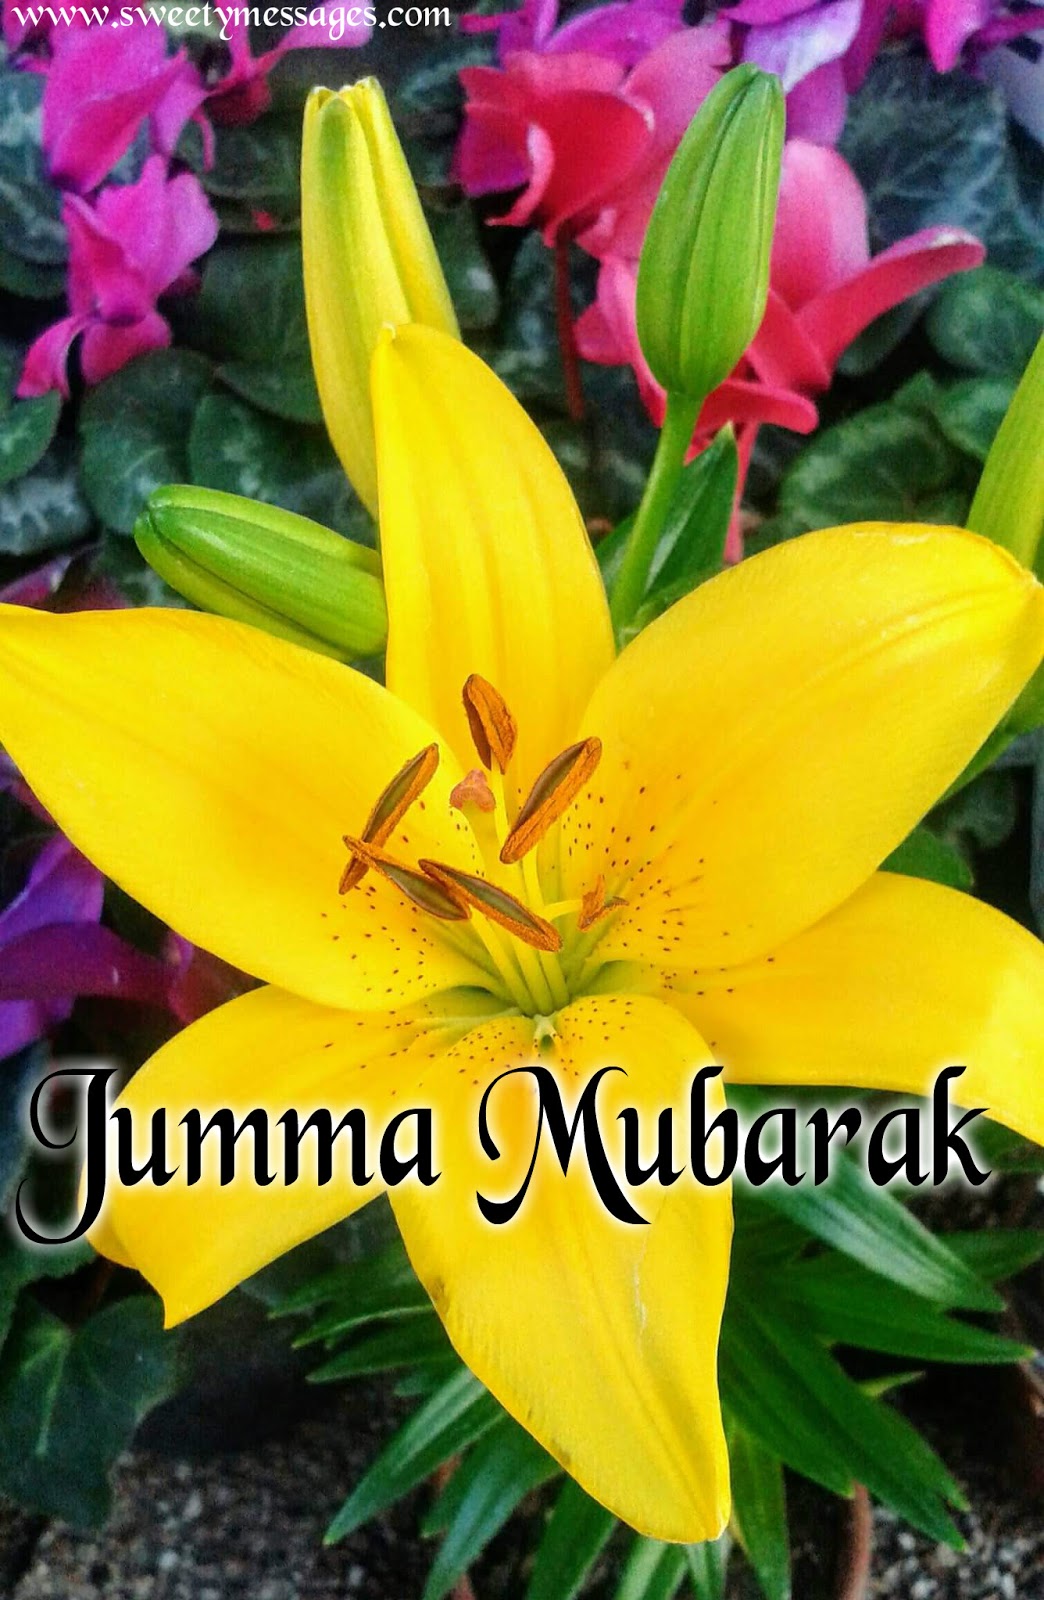 JUMMA MUBARAK IMAGES - Beautiful Messages1044 x 1600